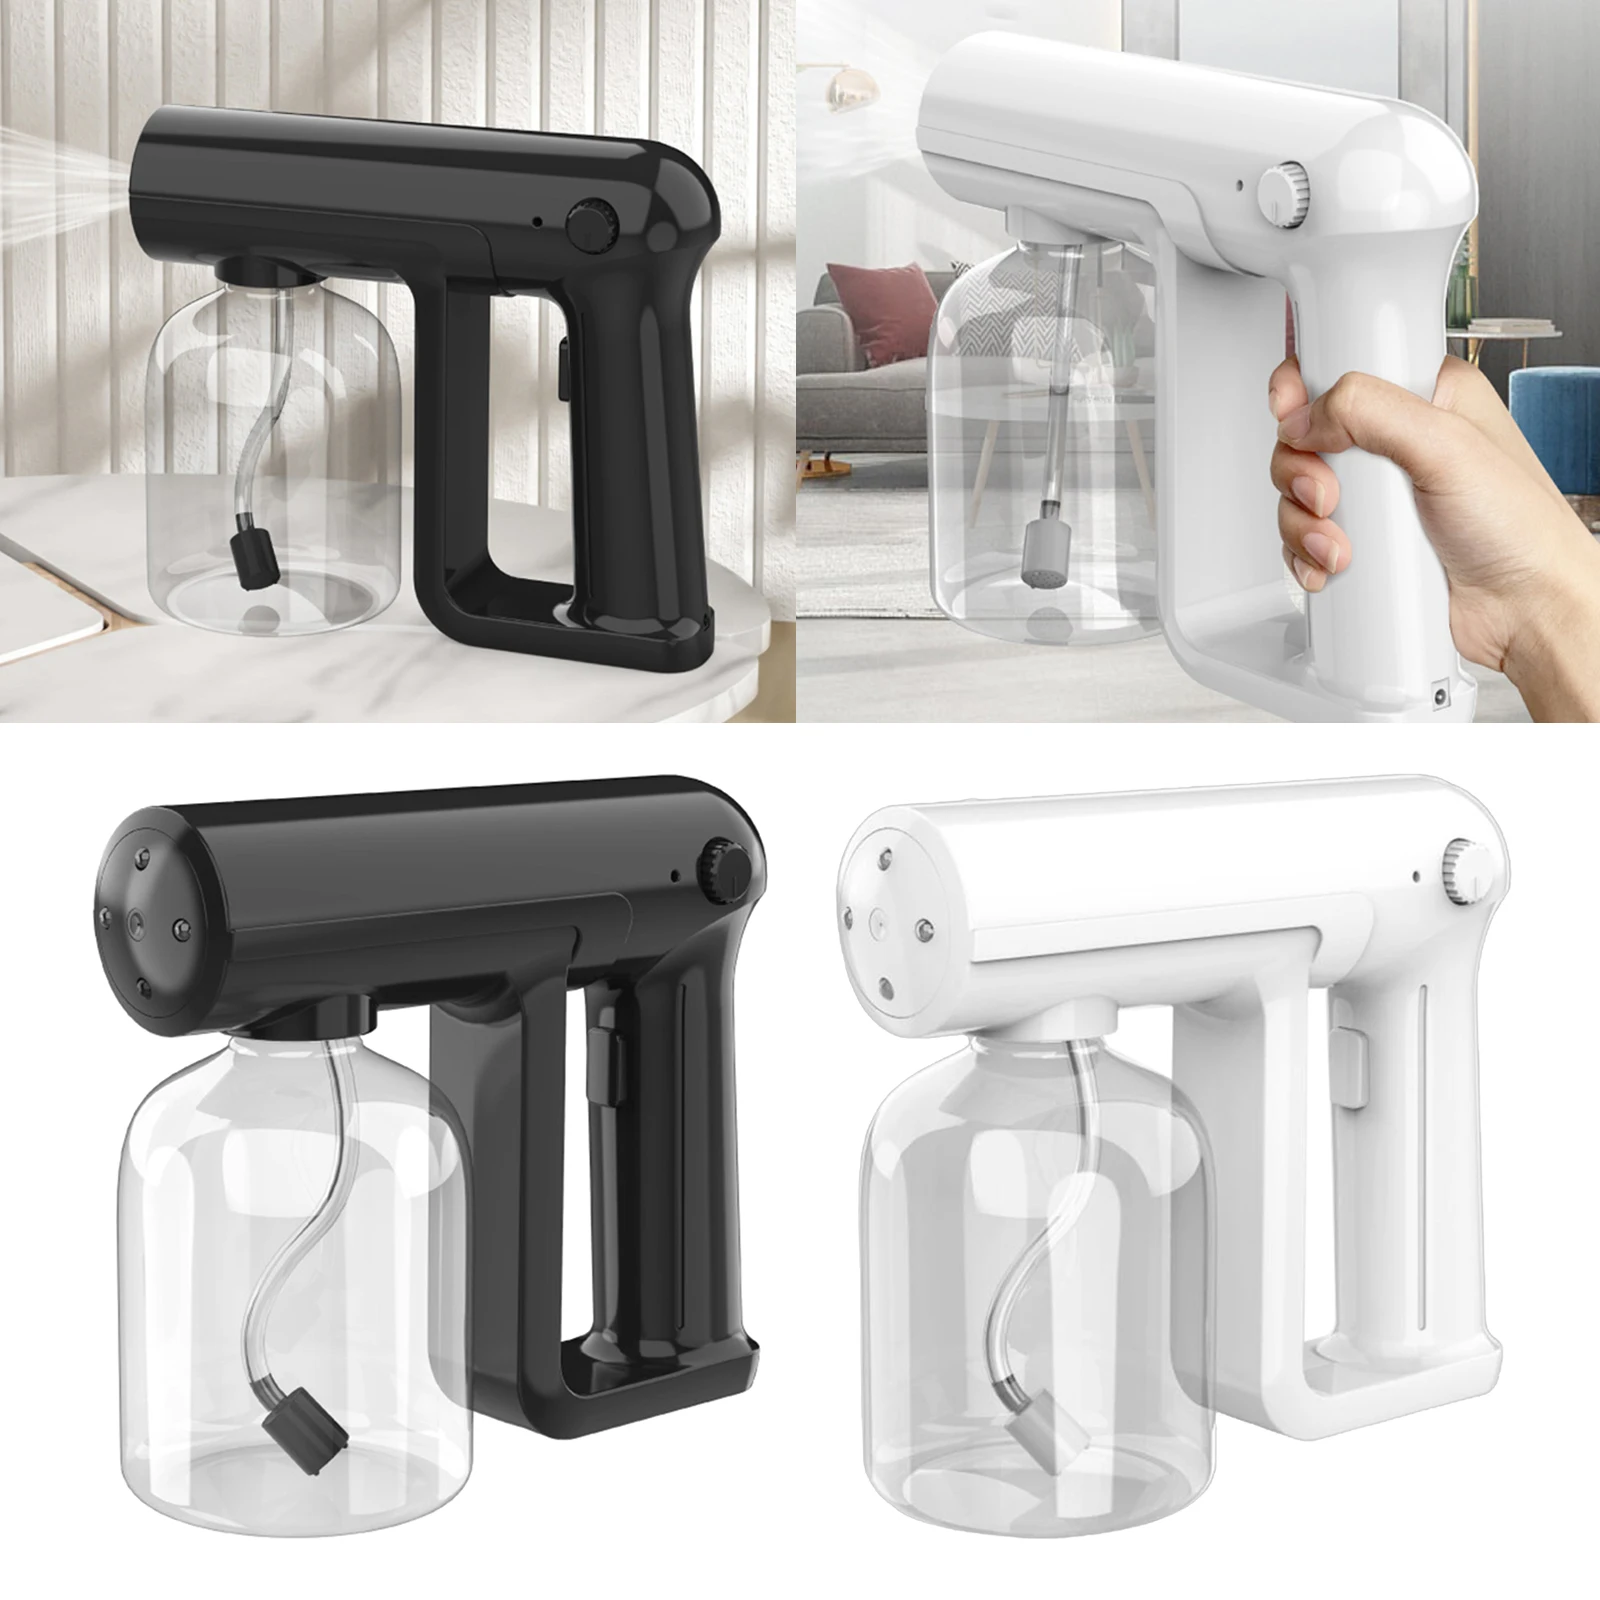 USB Nano Sprayer Spray  Sanitizer Handheld Disinfection Fogger Machine